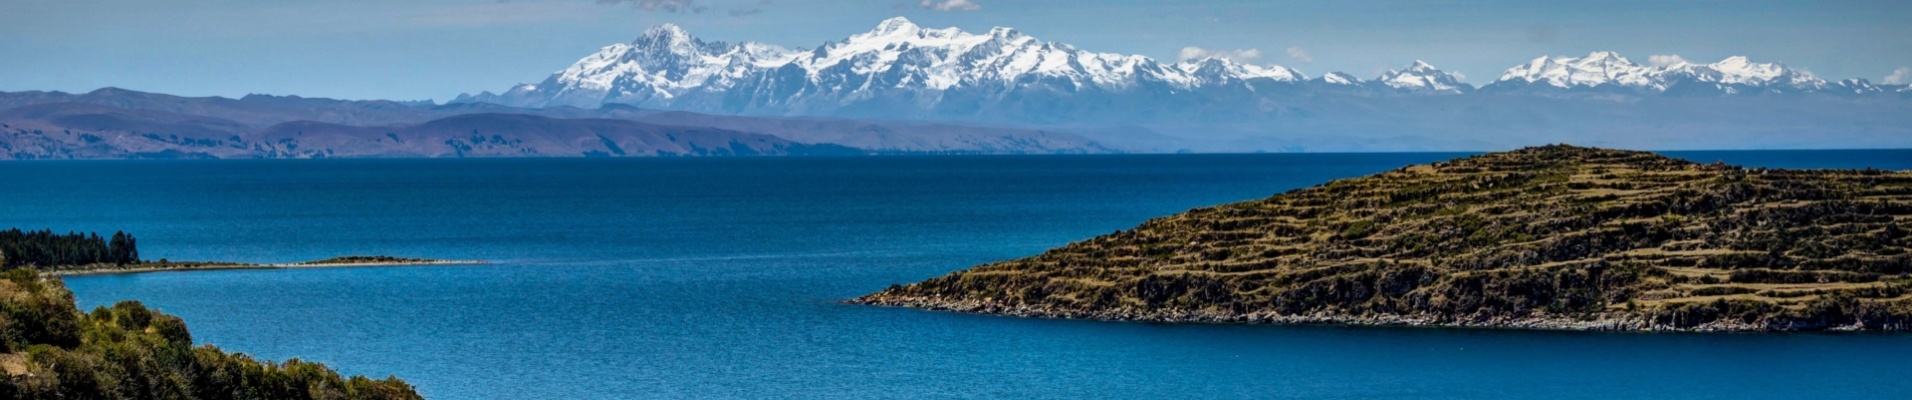 montagne-lac-titicaca-perou